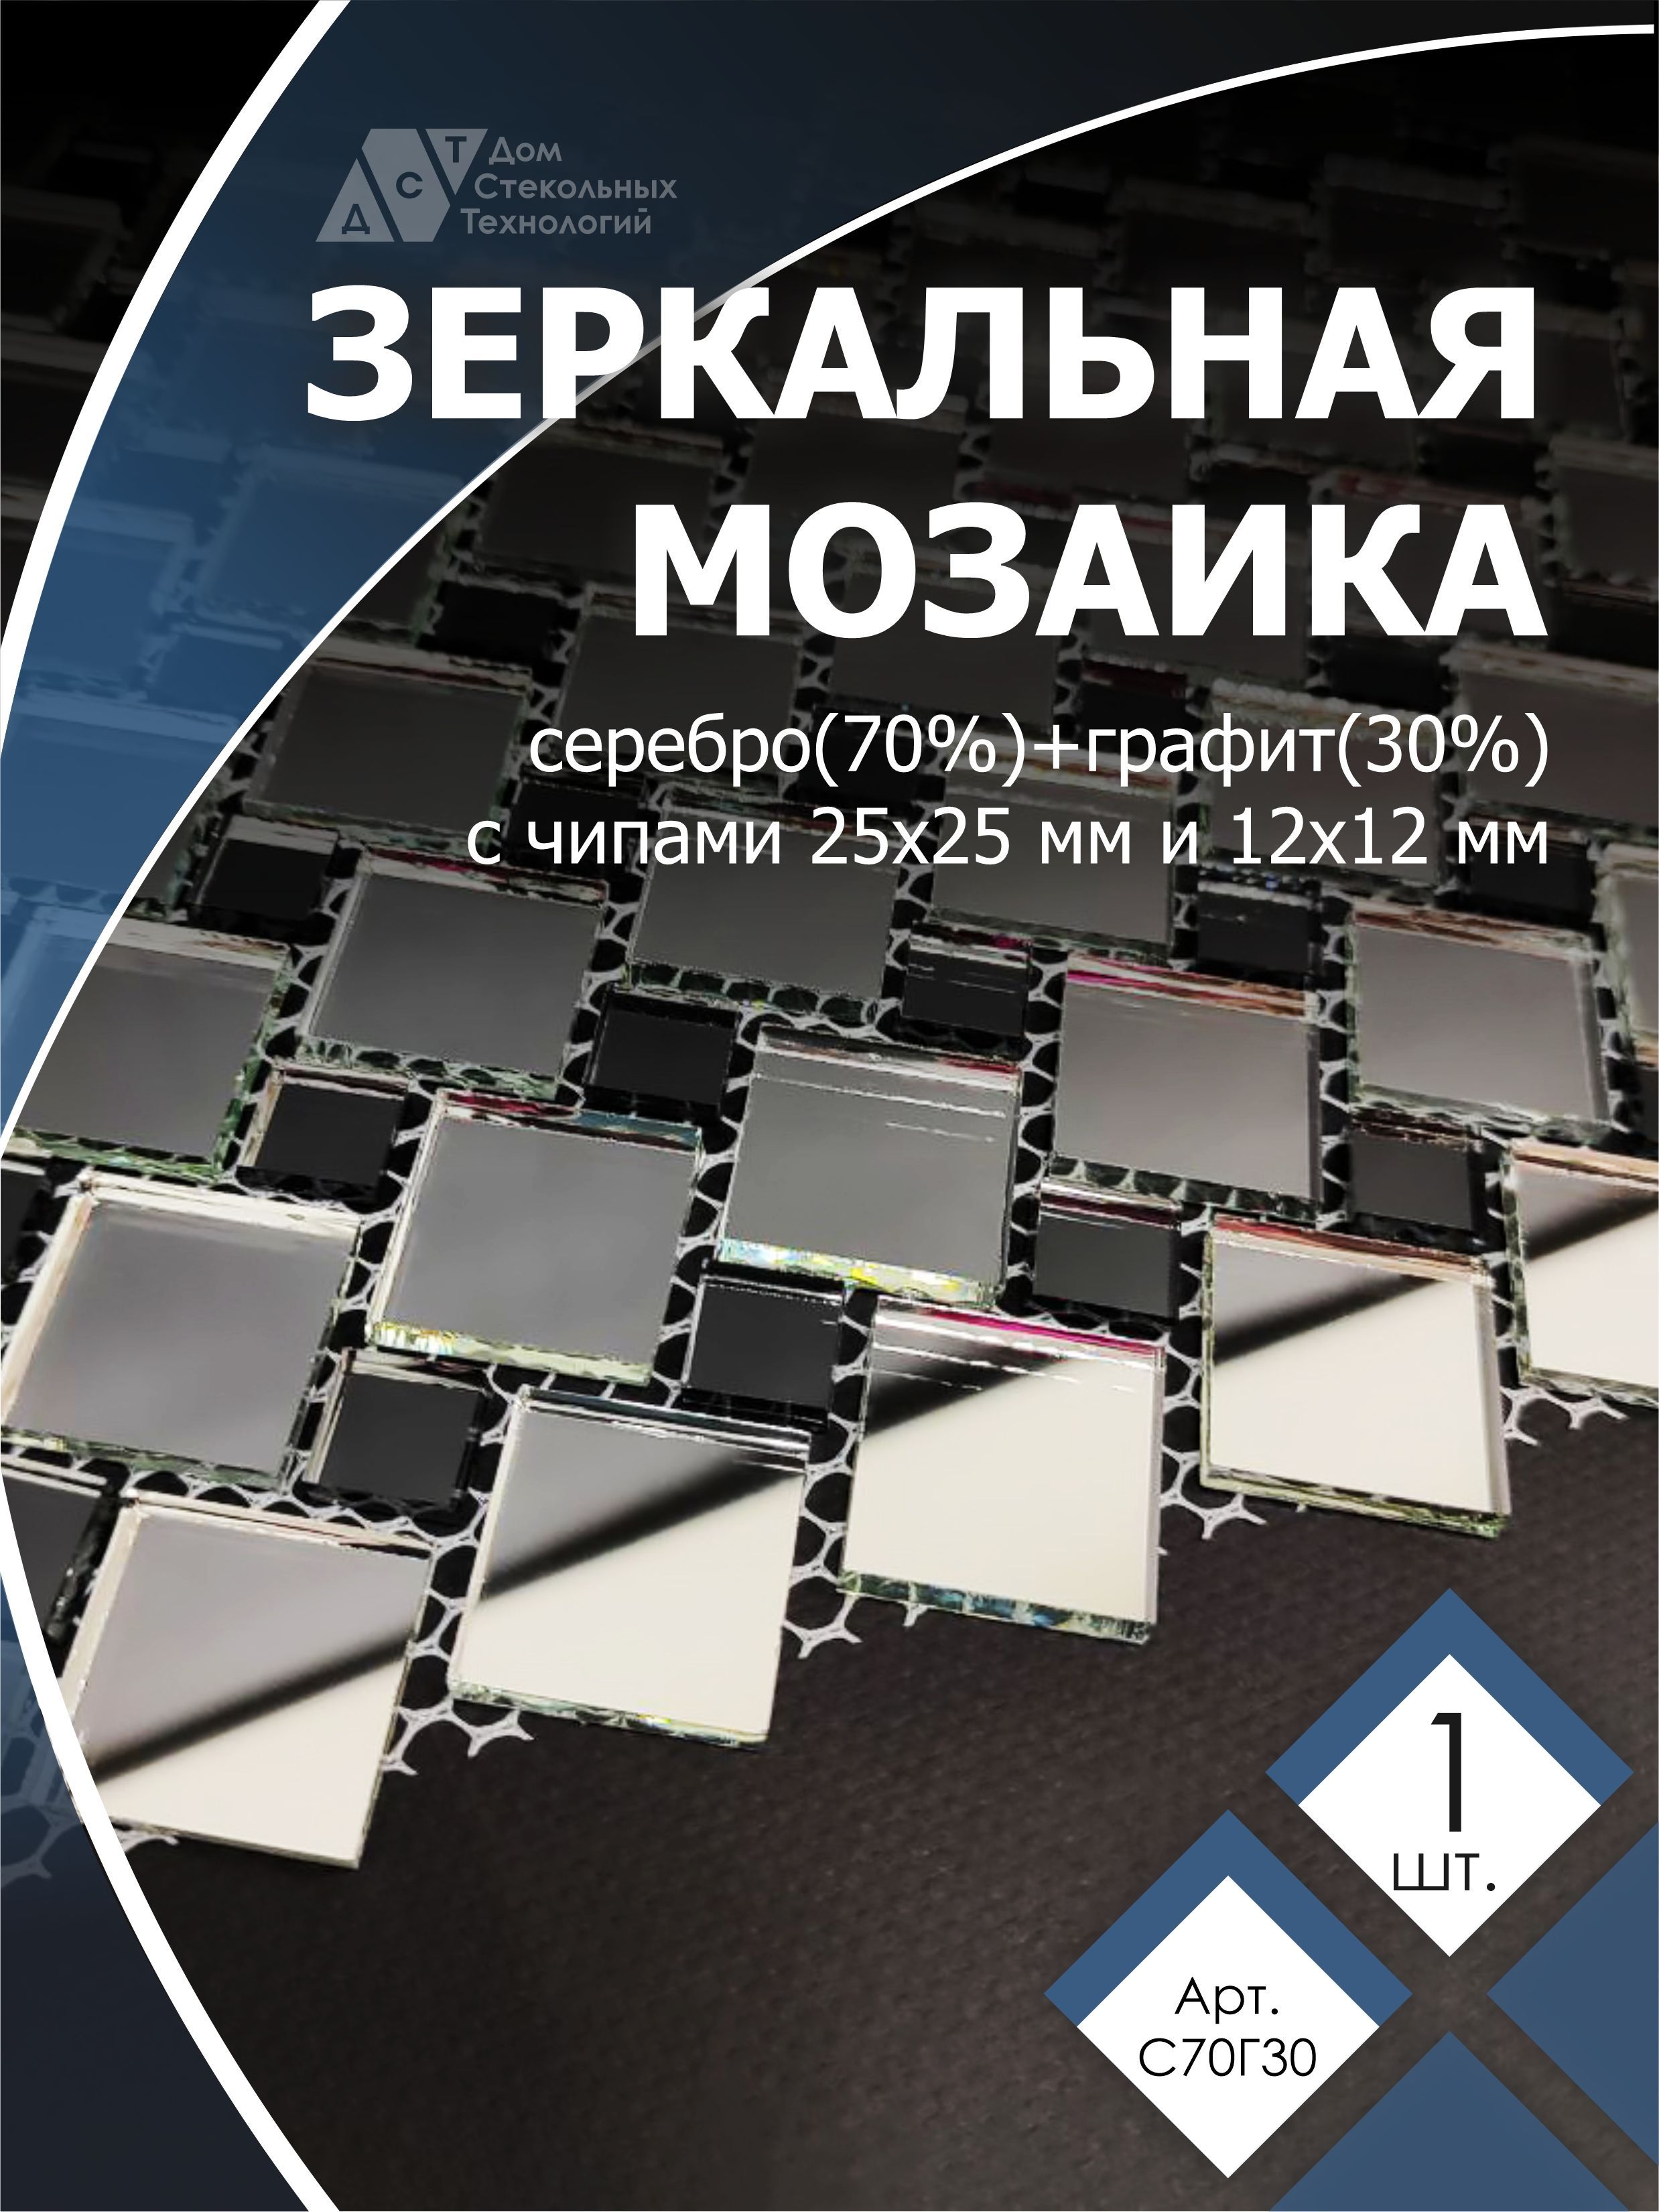 Зеркальная мозаика на сетке, ДСТ, 300х300 мм, серебро 70%, графит 30% (1 лист) целлюлозные губки для посуды paclan